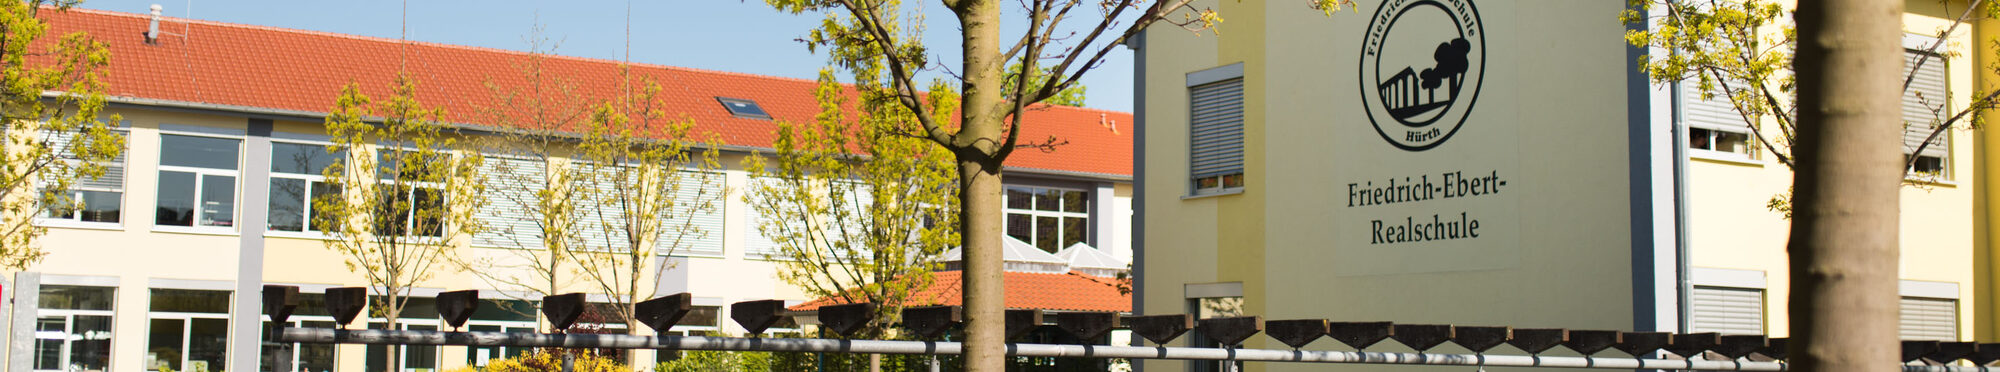 Hermülheim, Friedrich-Ebert-Realschule